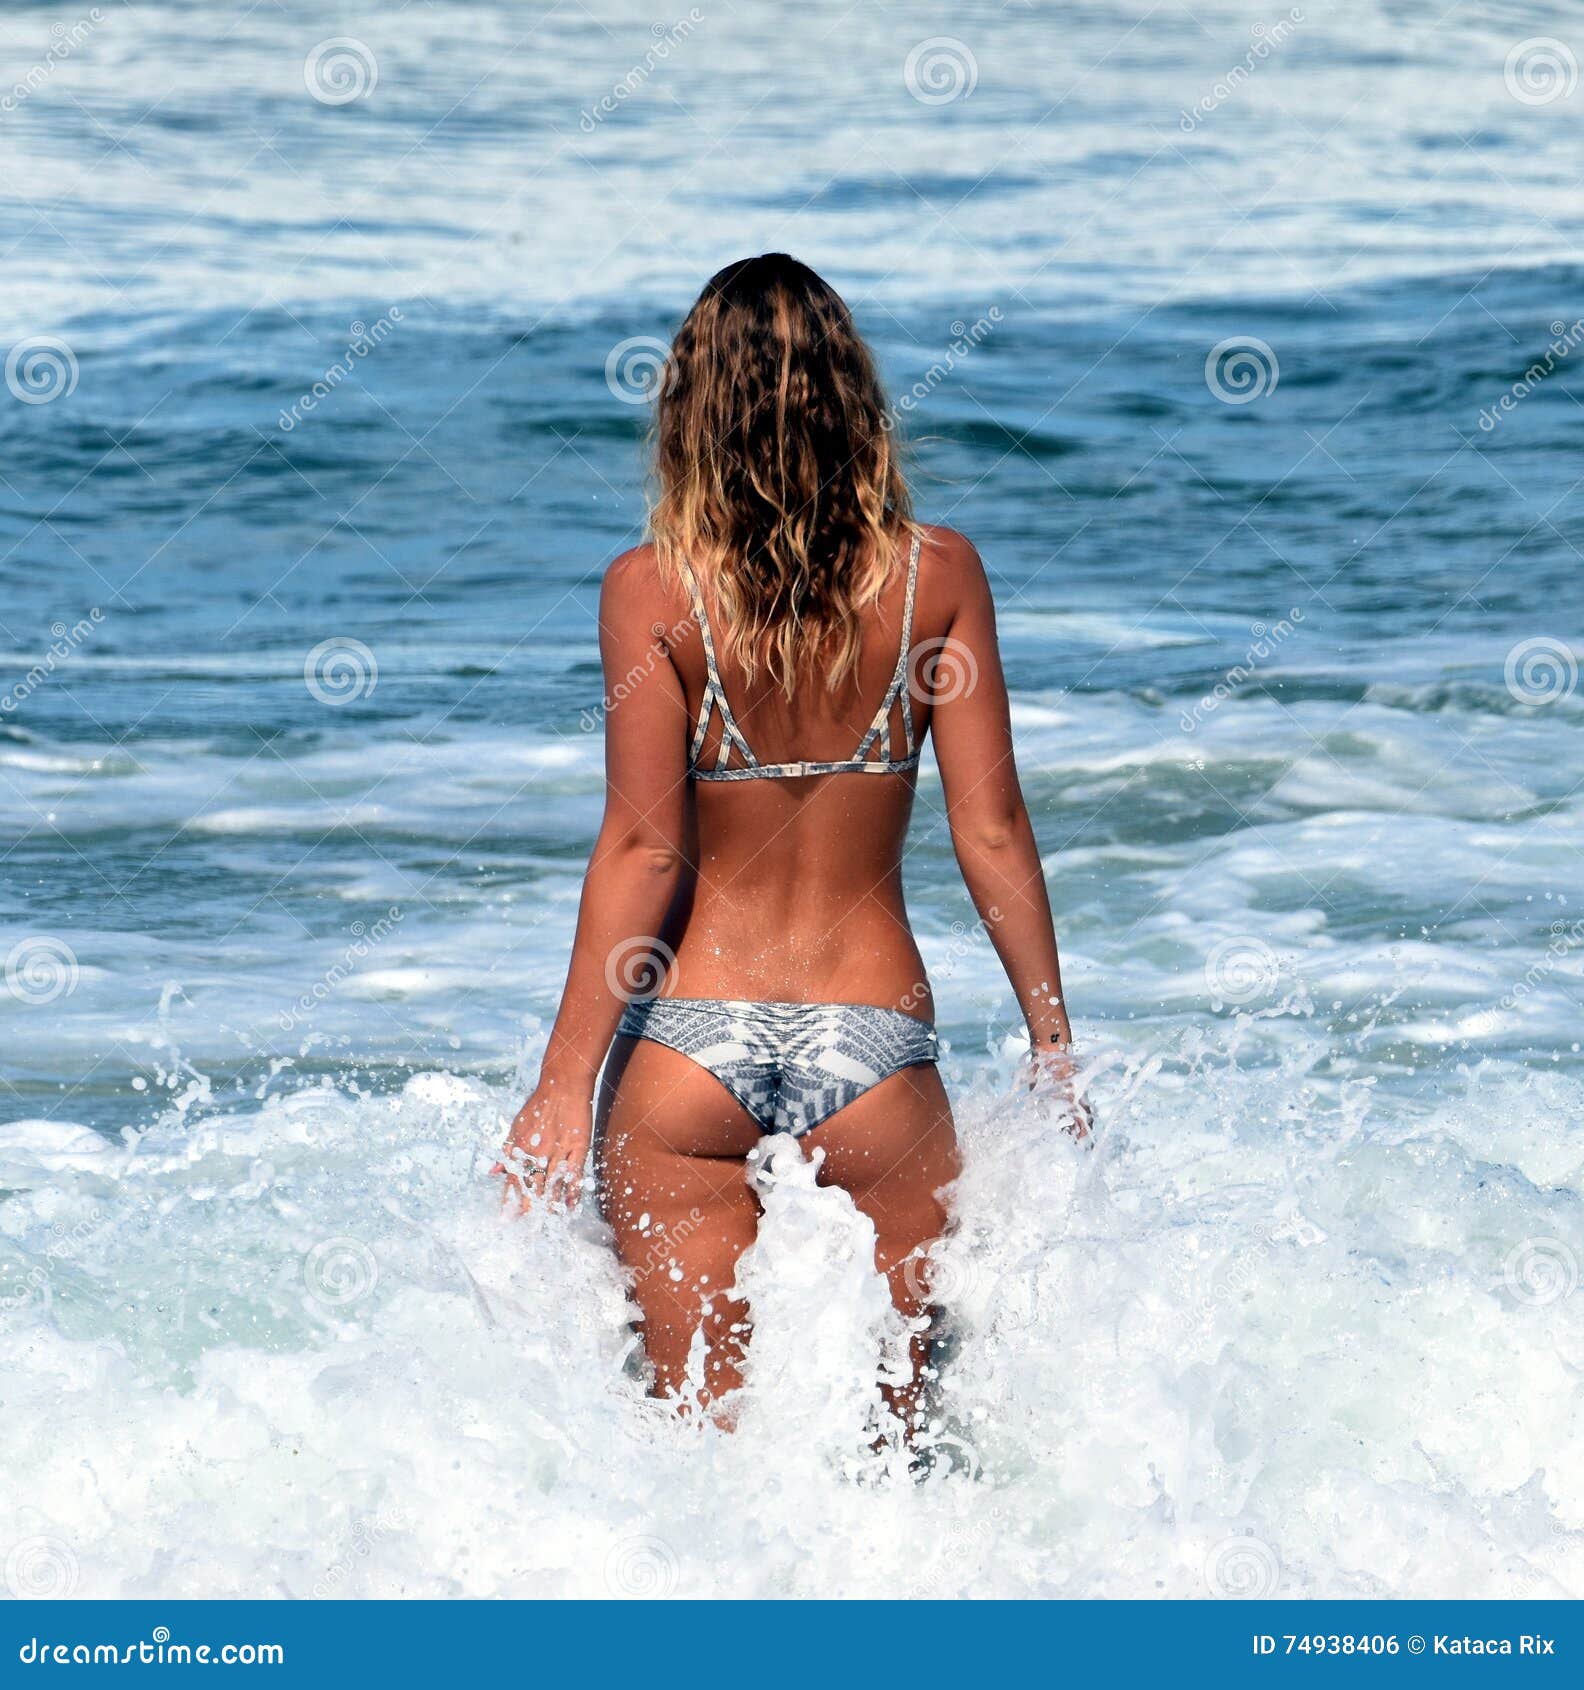 Girl enjoying the waves editorial photo hq image